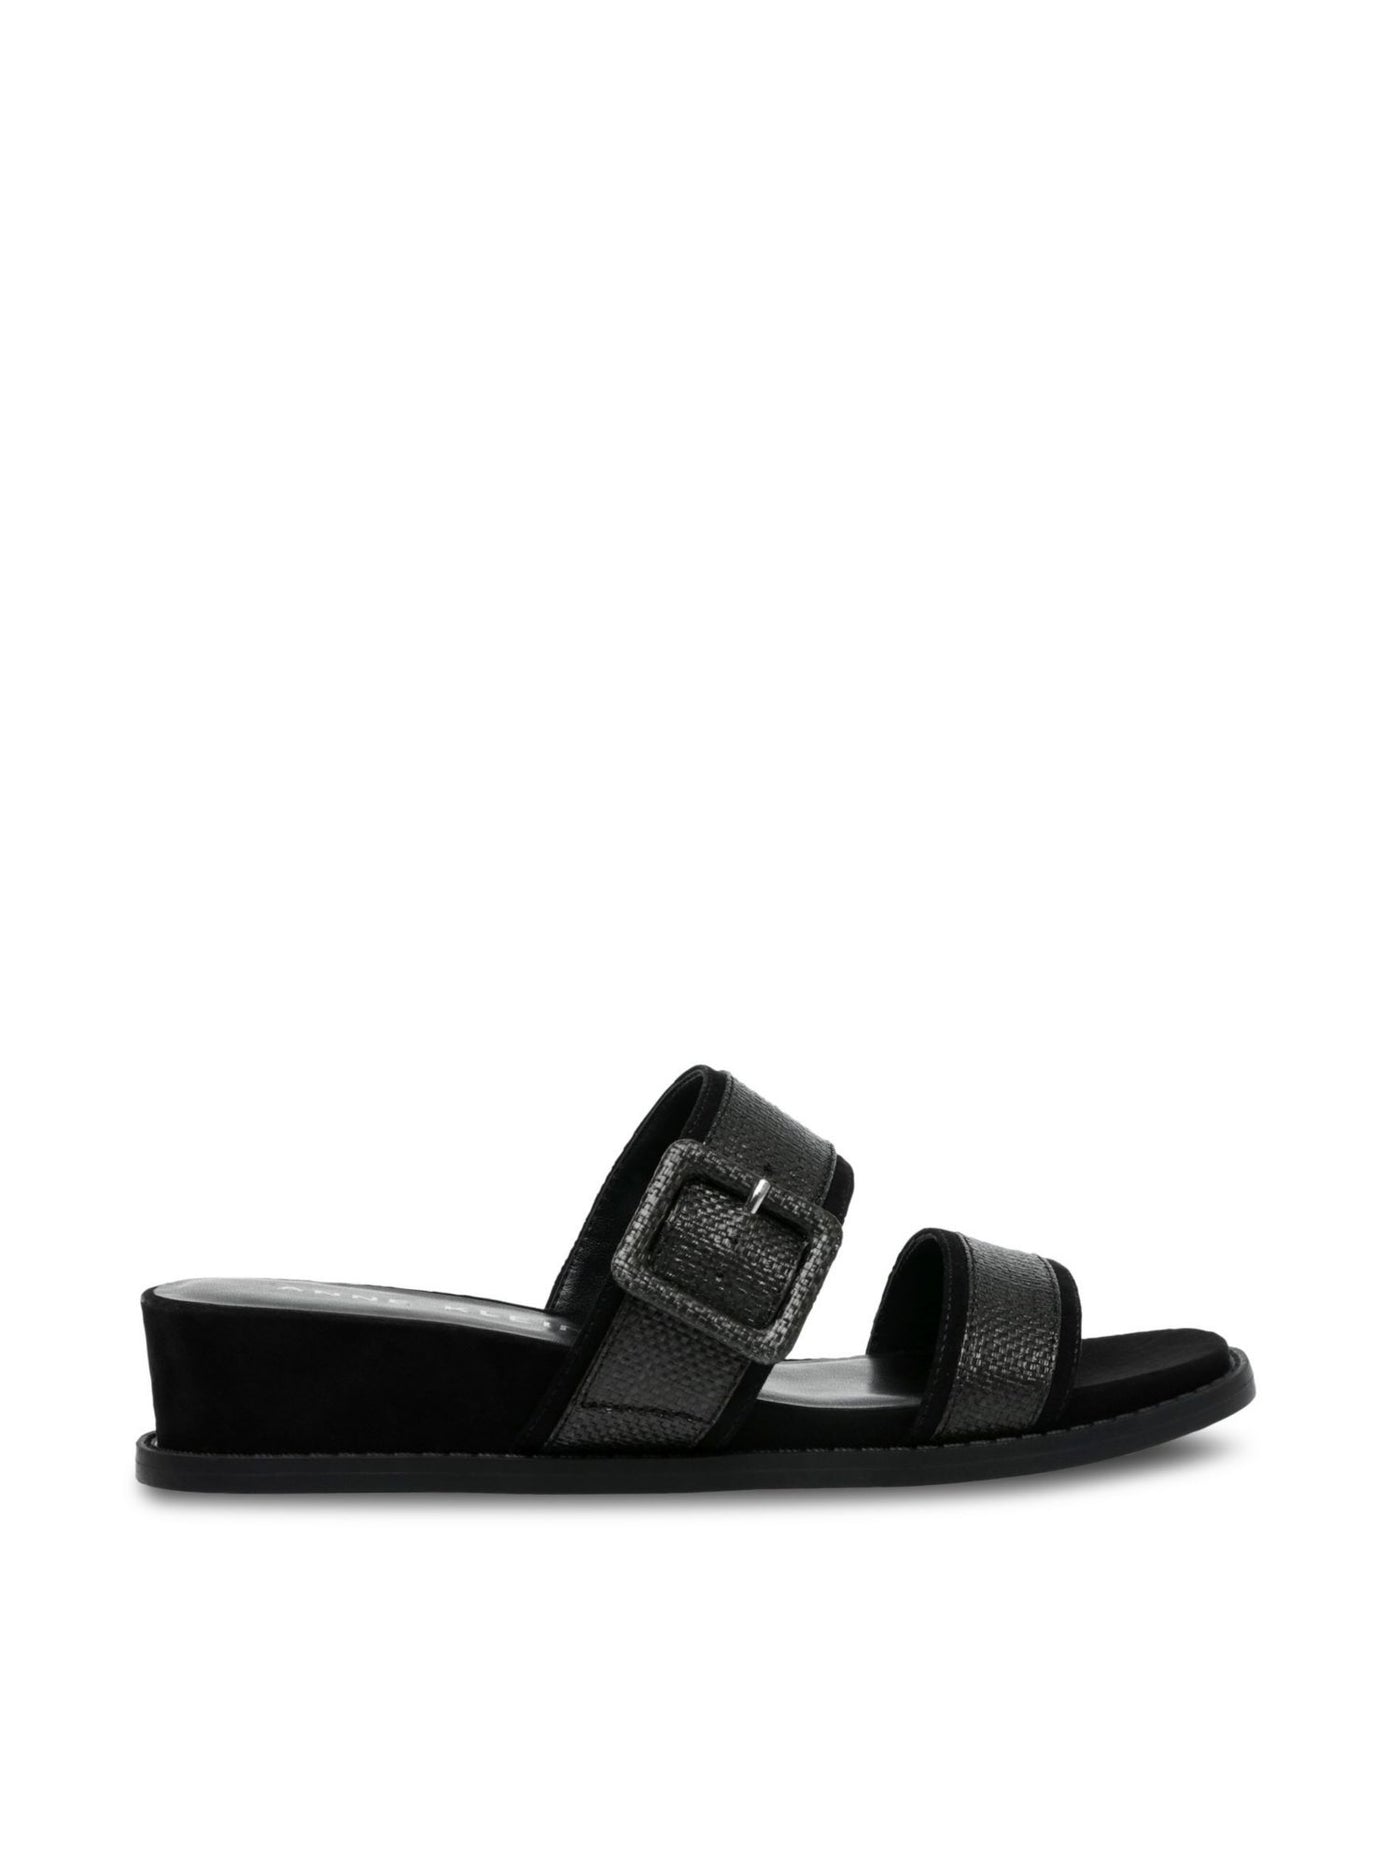 ANNE KLEIN Womens Black Buckle Accent Comfort Brenda Round Toe Wedge Slip On Slide Sandals Shoes 10.5 M